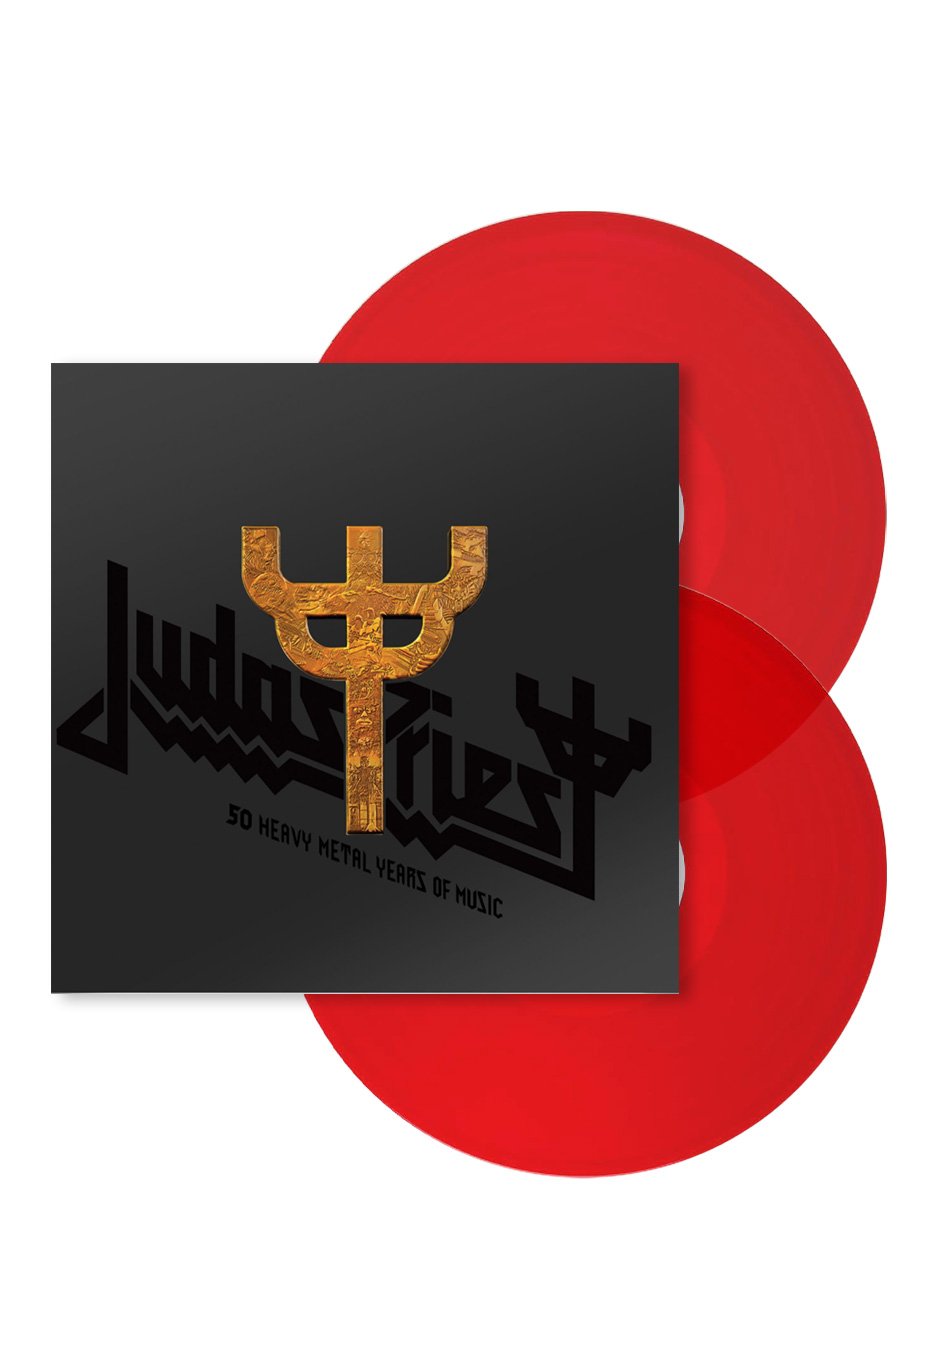 Judas Priest - Reflections - 50 Heavy Metal Years Of Music Ltd. Red - Colored 2 Vinyl